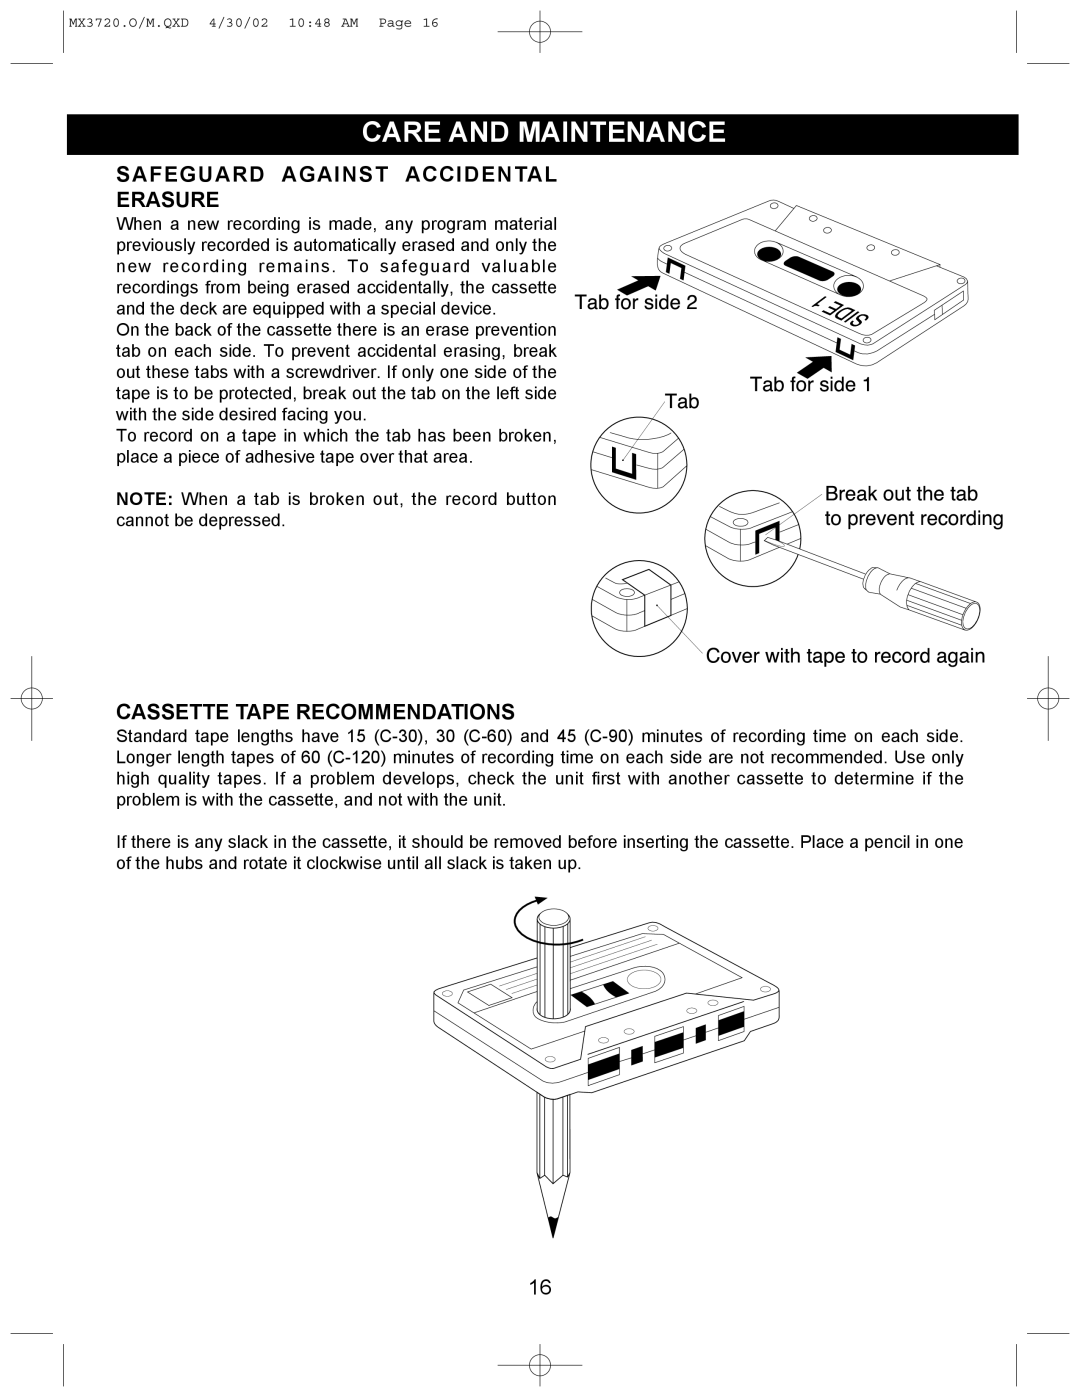 Memorex MX3720 manual Safeguard Against Accidental Erasure, Cassette Tape Recommendations, Coverwithtapetorecordagain 